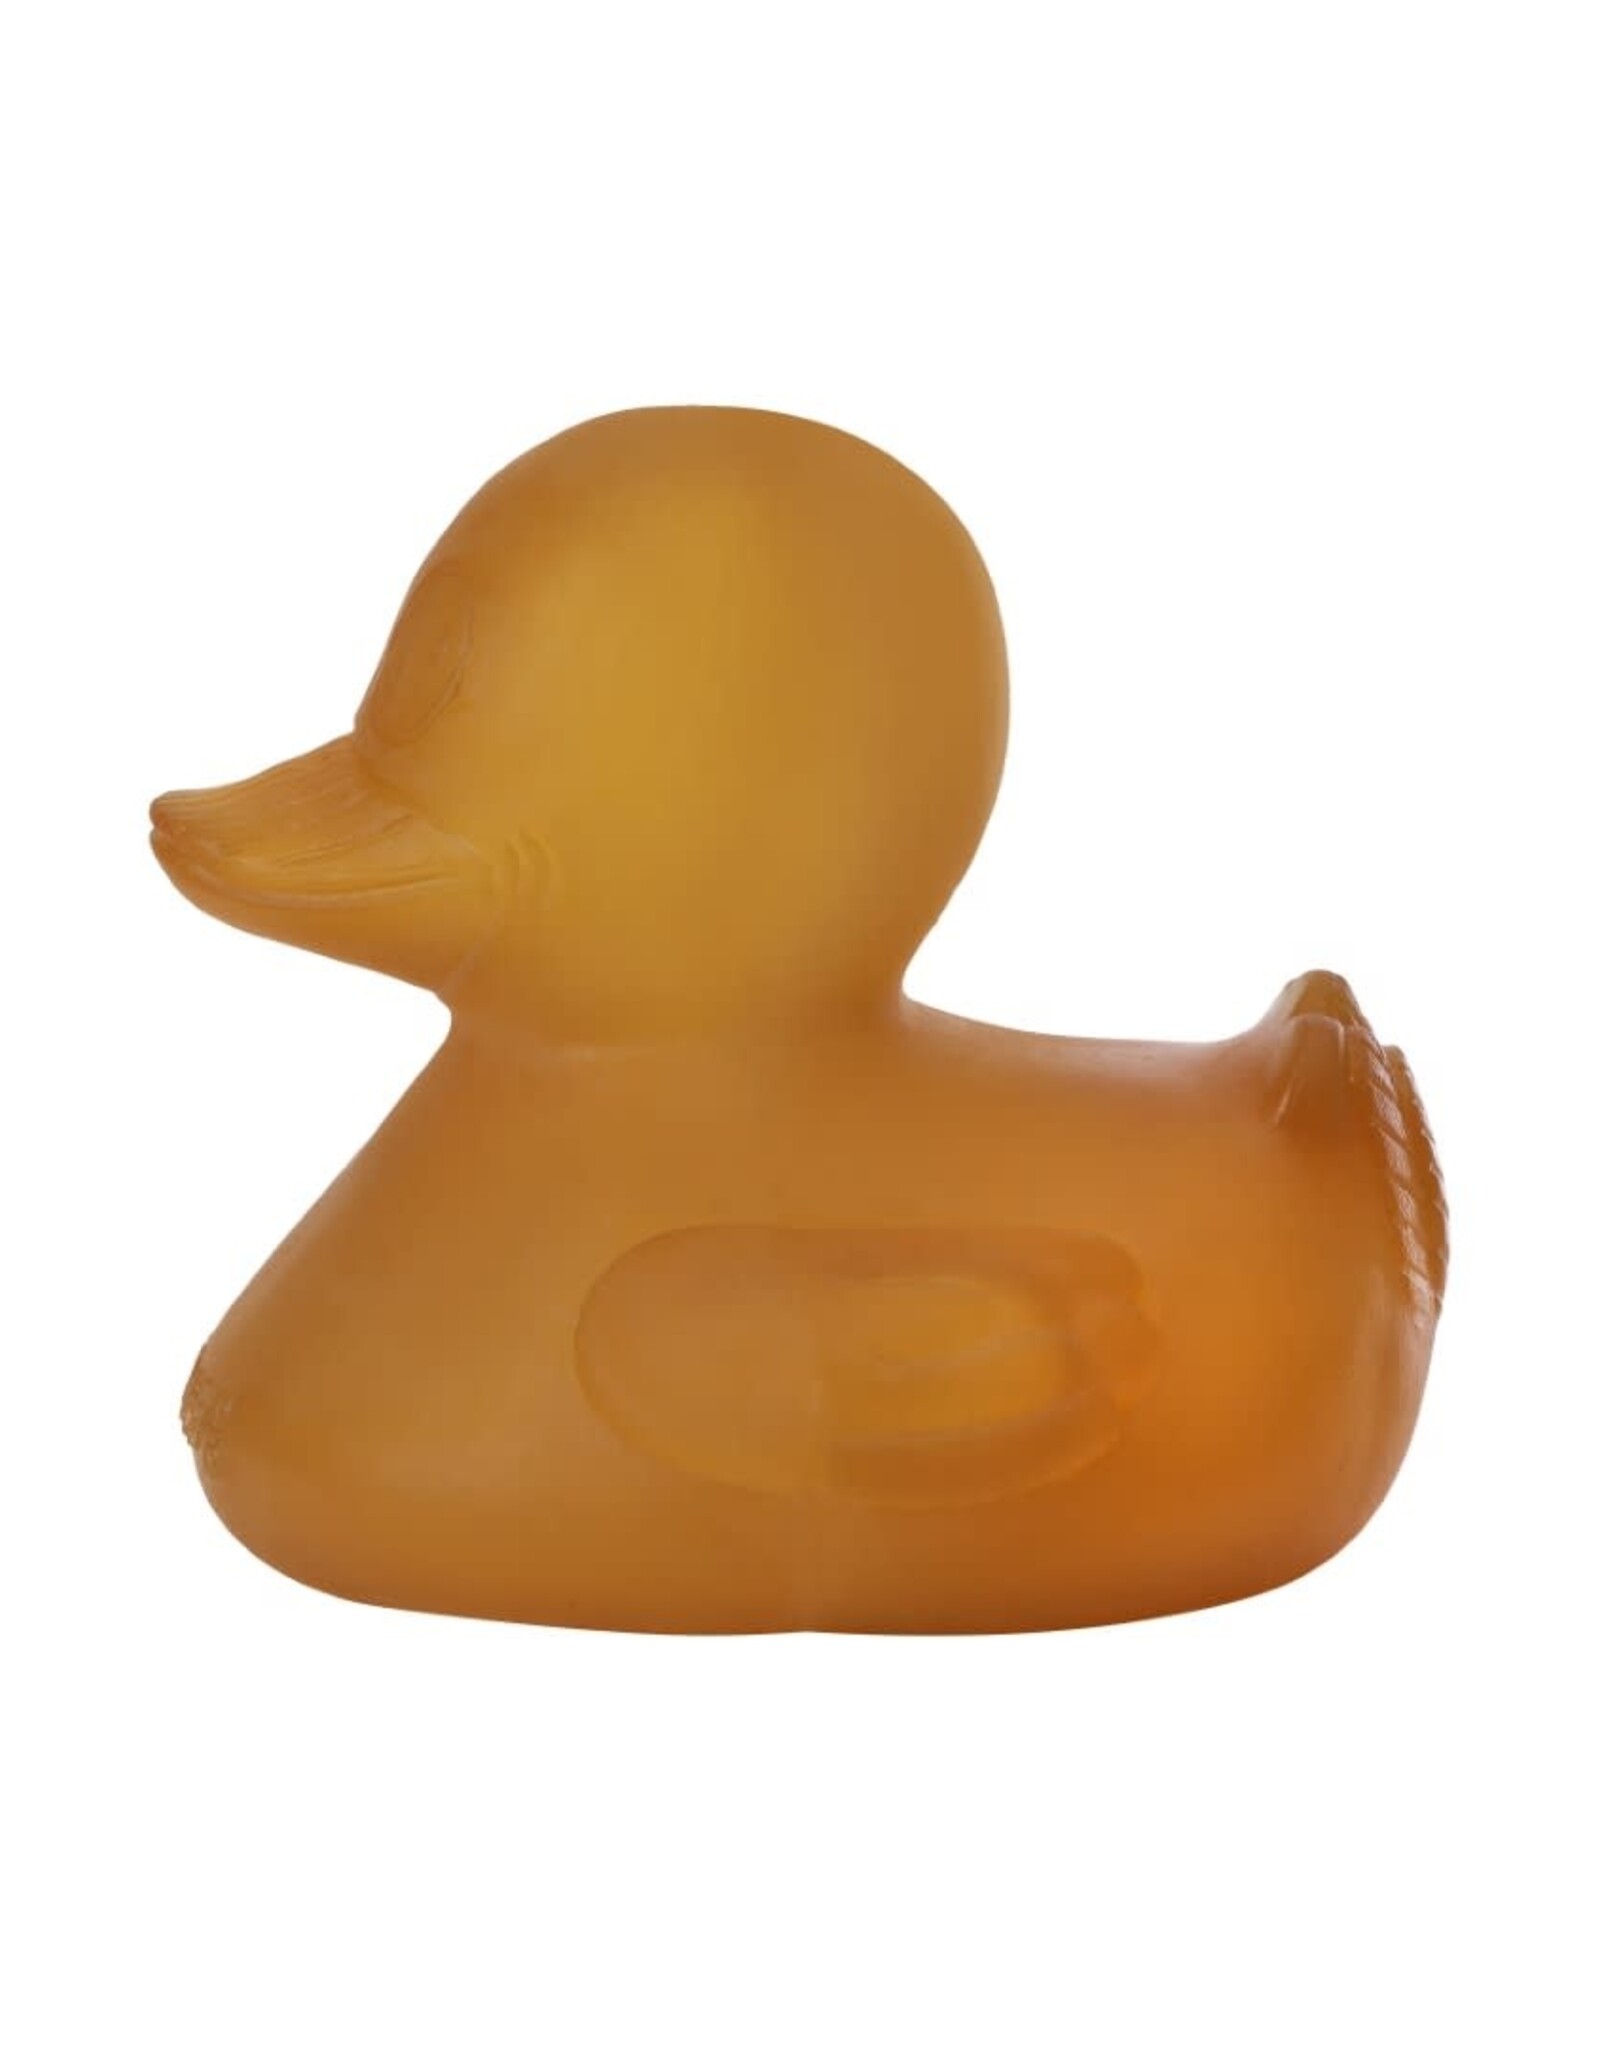 Hevea Duck Bath Toy